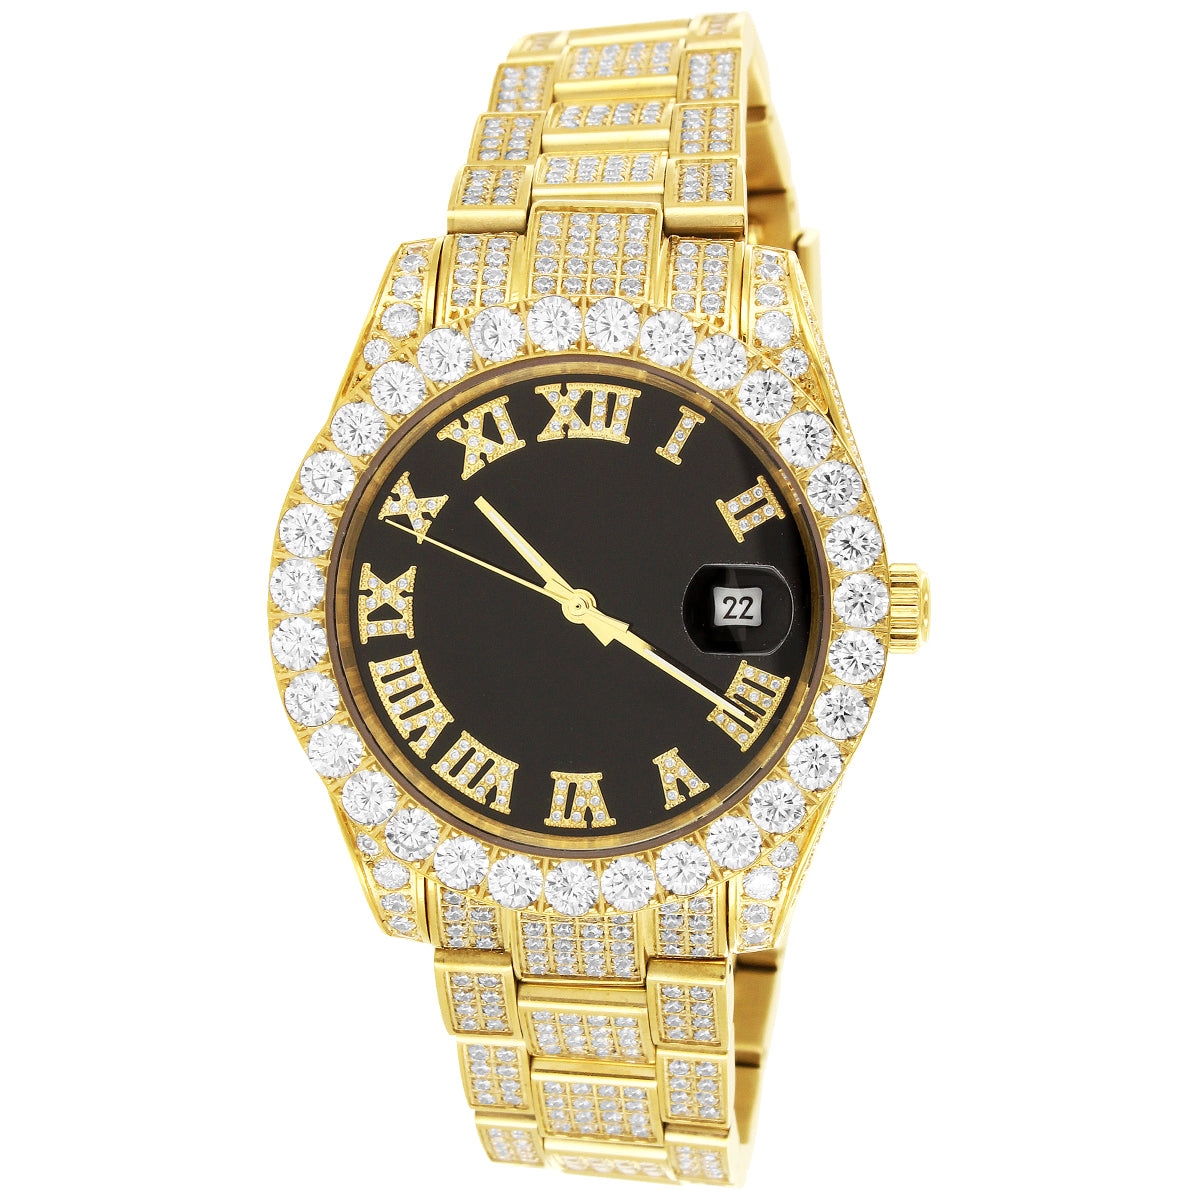 Steel 40mm Gold Solitaire Bezel Roman Dial Band Watch